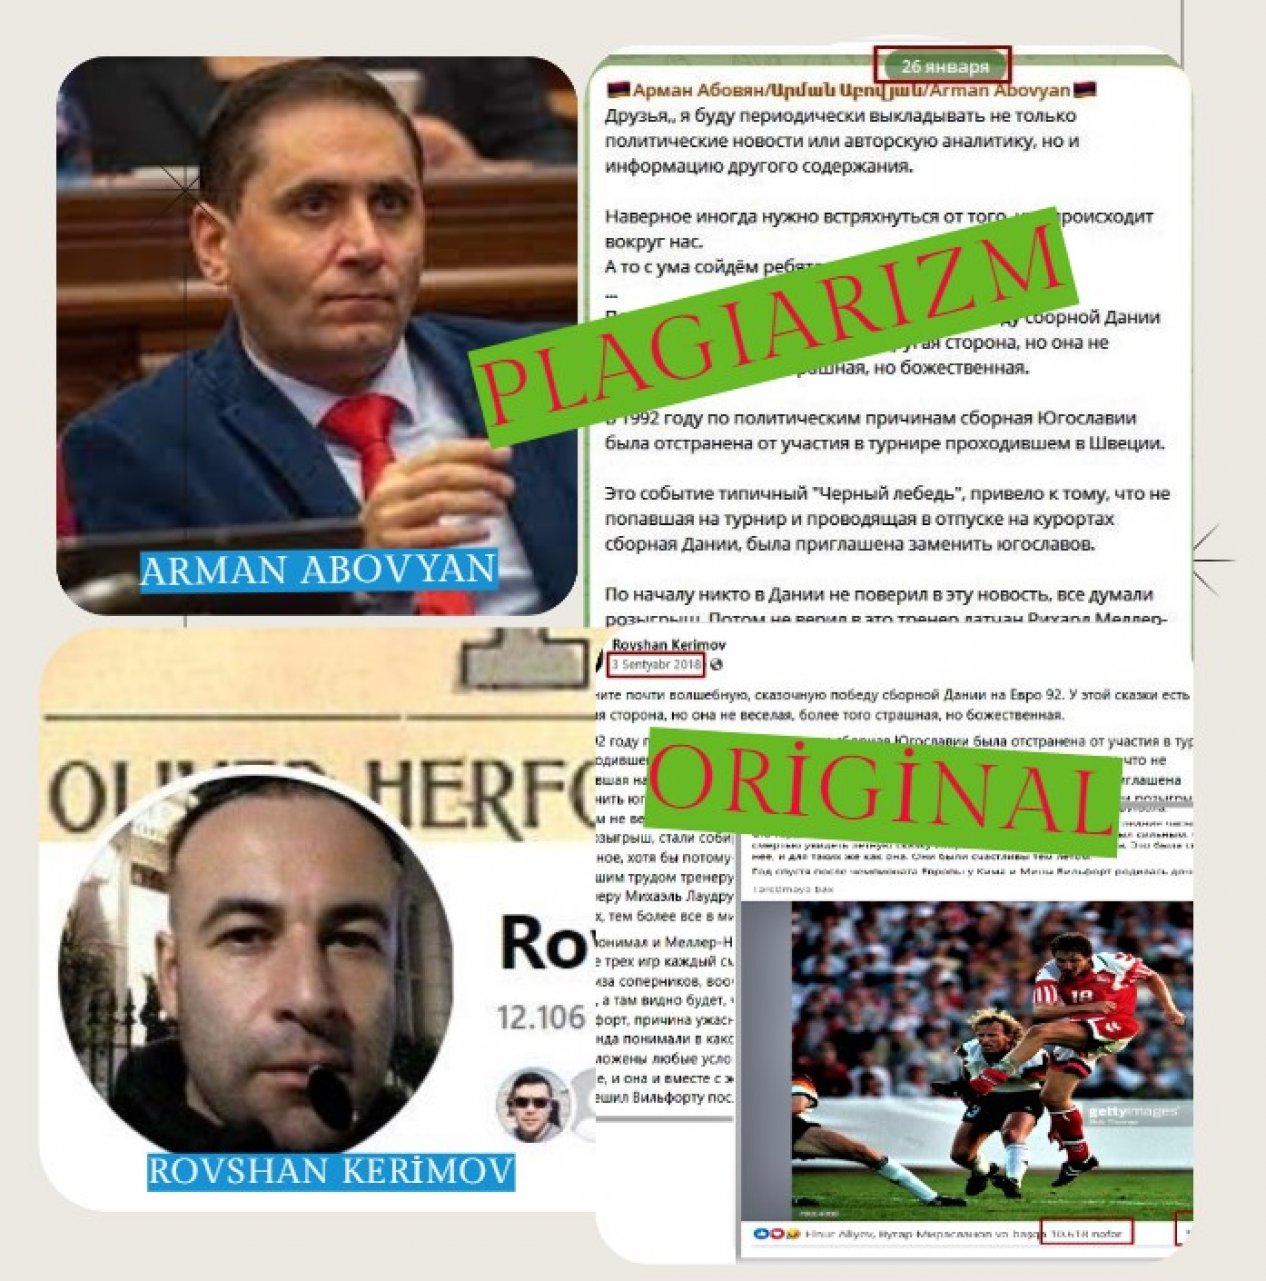 Armenian MP plagiarized from Azerbaijani author - FACT